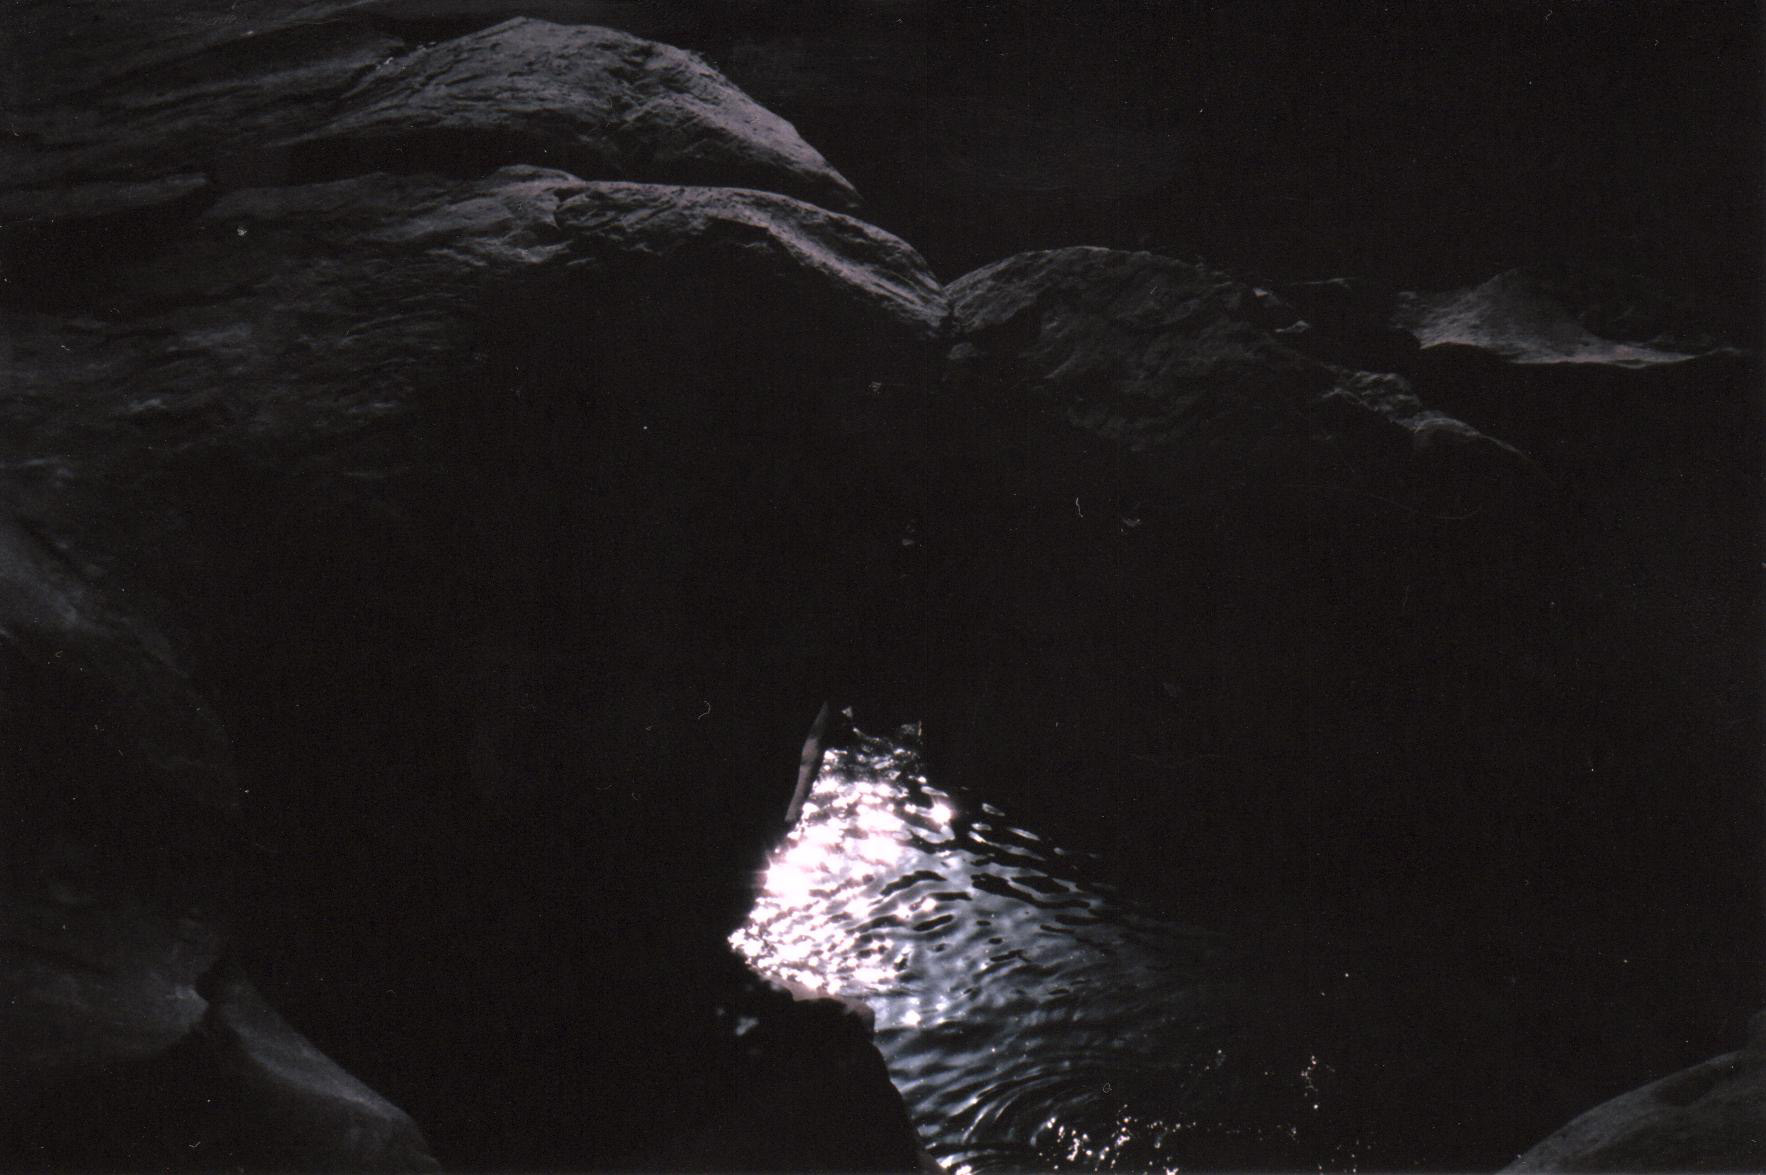 sun reflecting on water between rocks